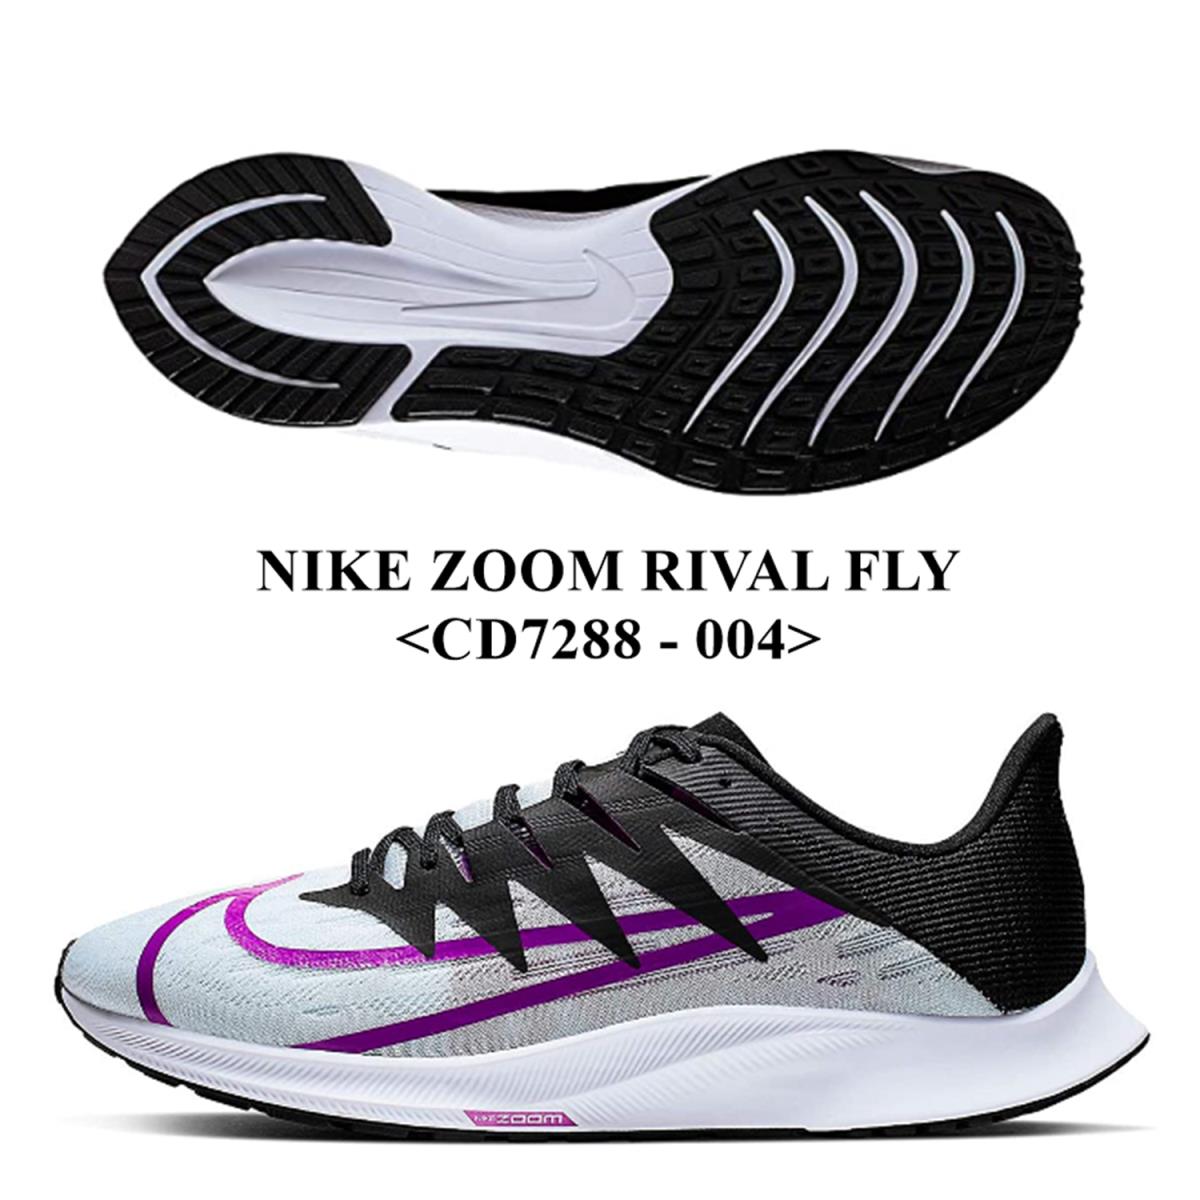 Nike Zoom Rival Fly CD7288 - 004 Men`s Running/sneaker Shoes